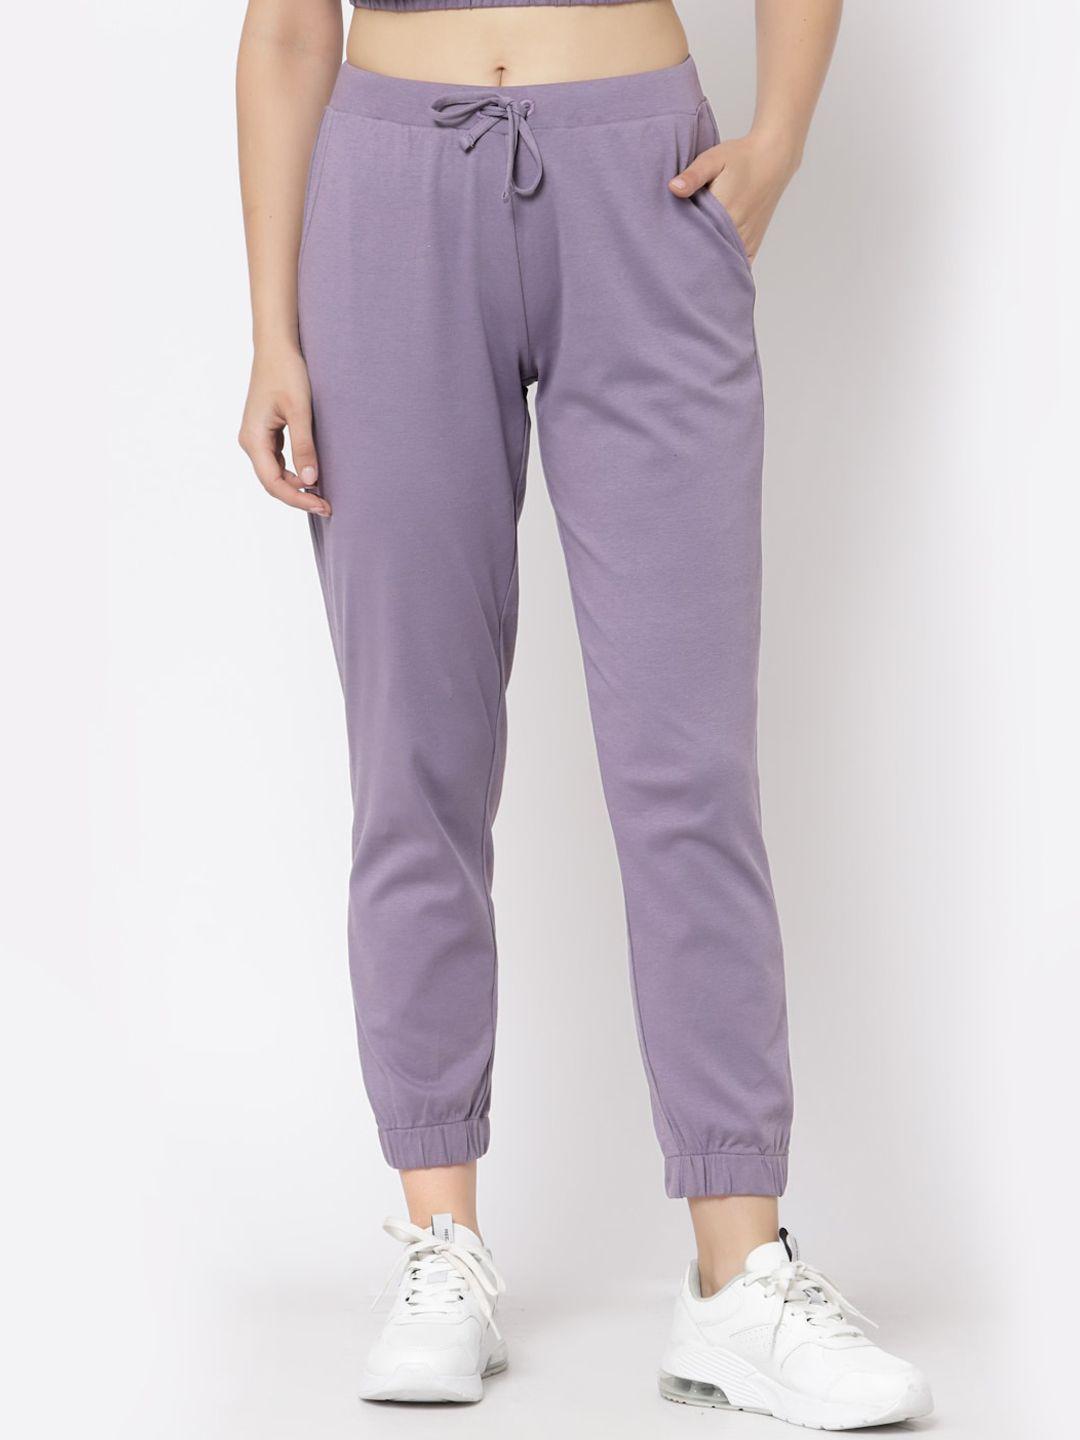 yoonoy-women-purple-solid-cotton-joggers